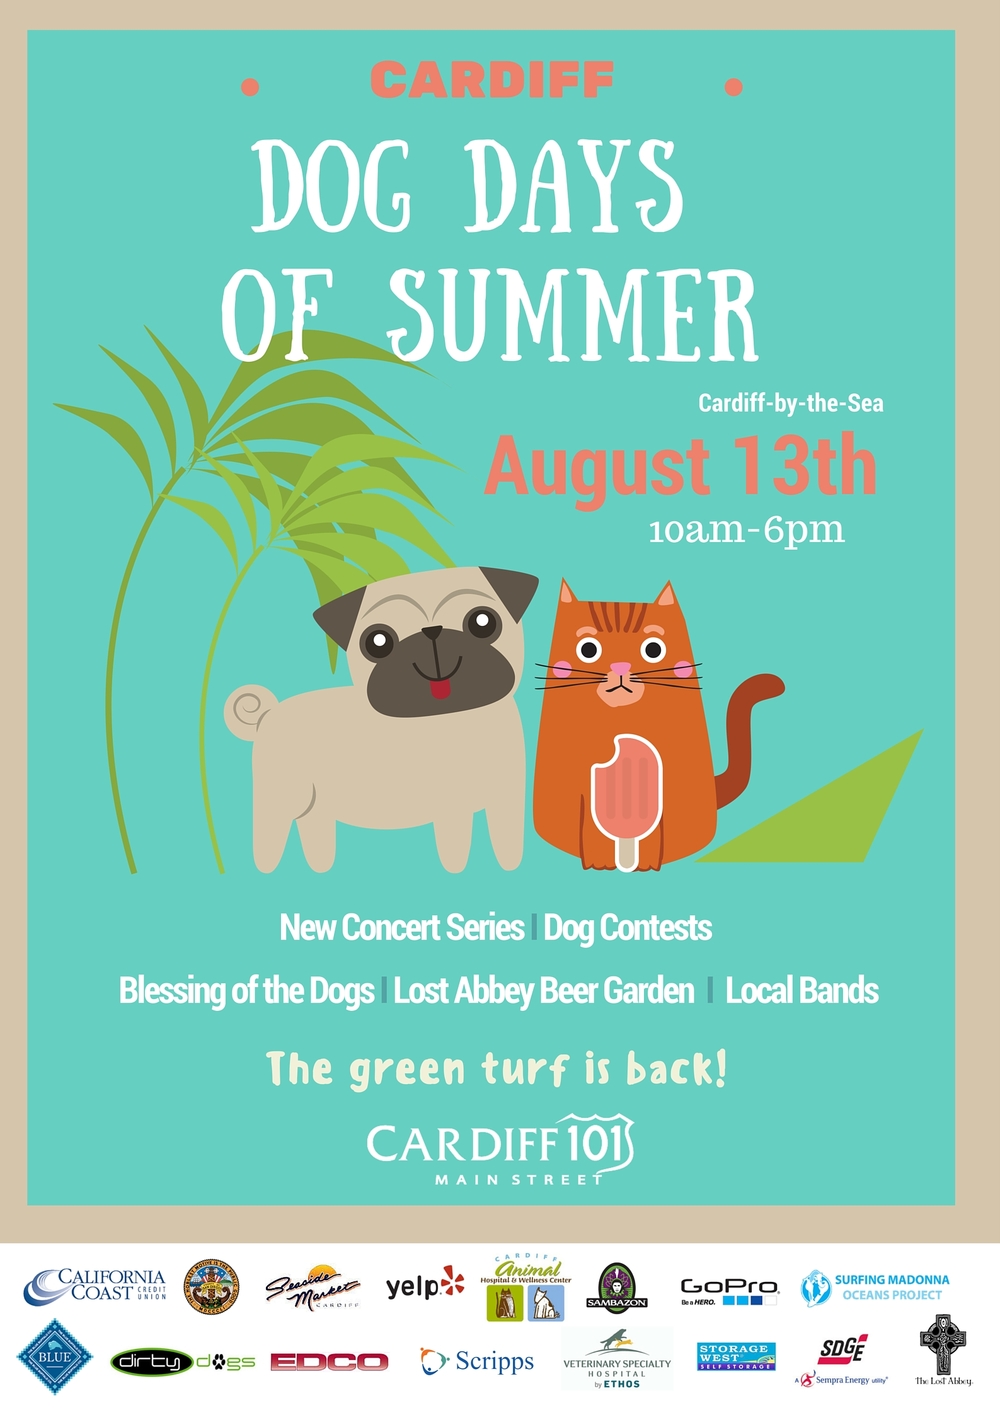 Cardiff Dog Days of Summer — Cardiff 101 Main Street